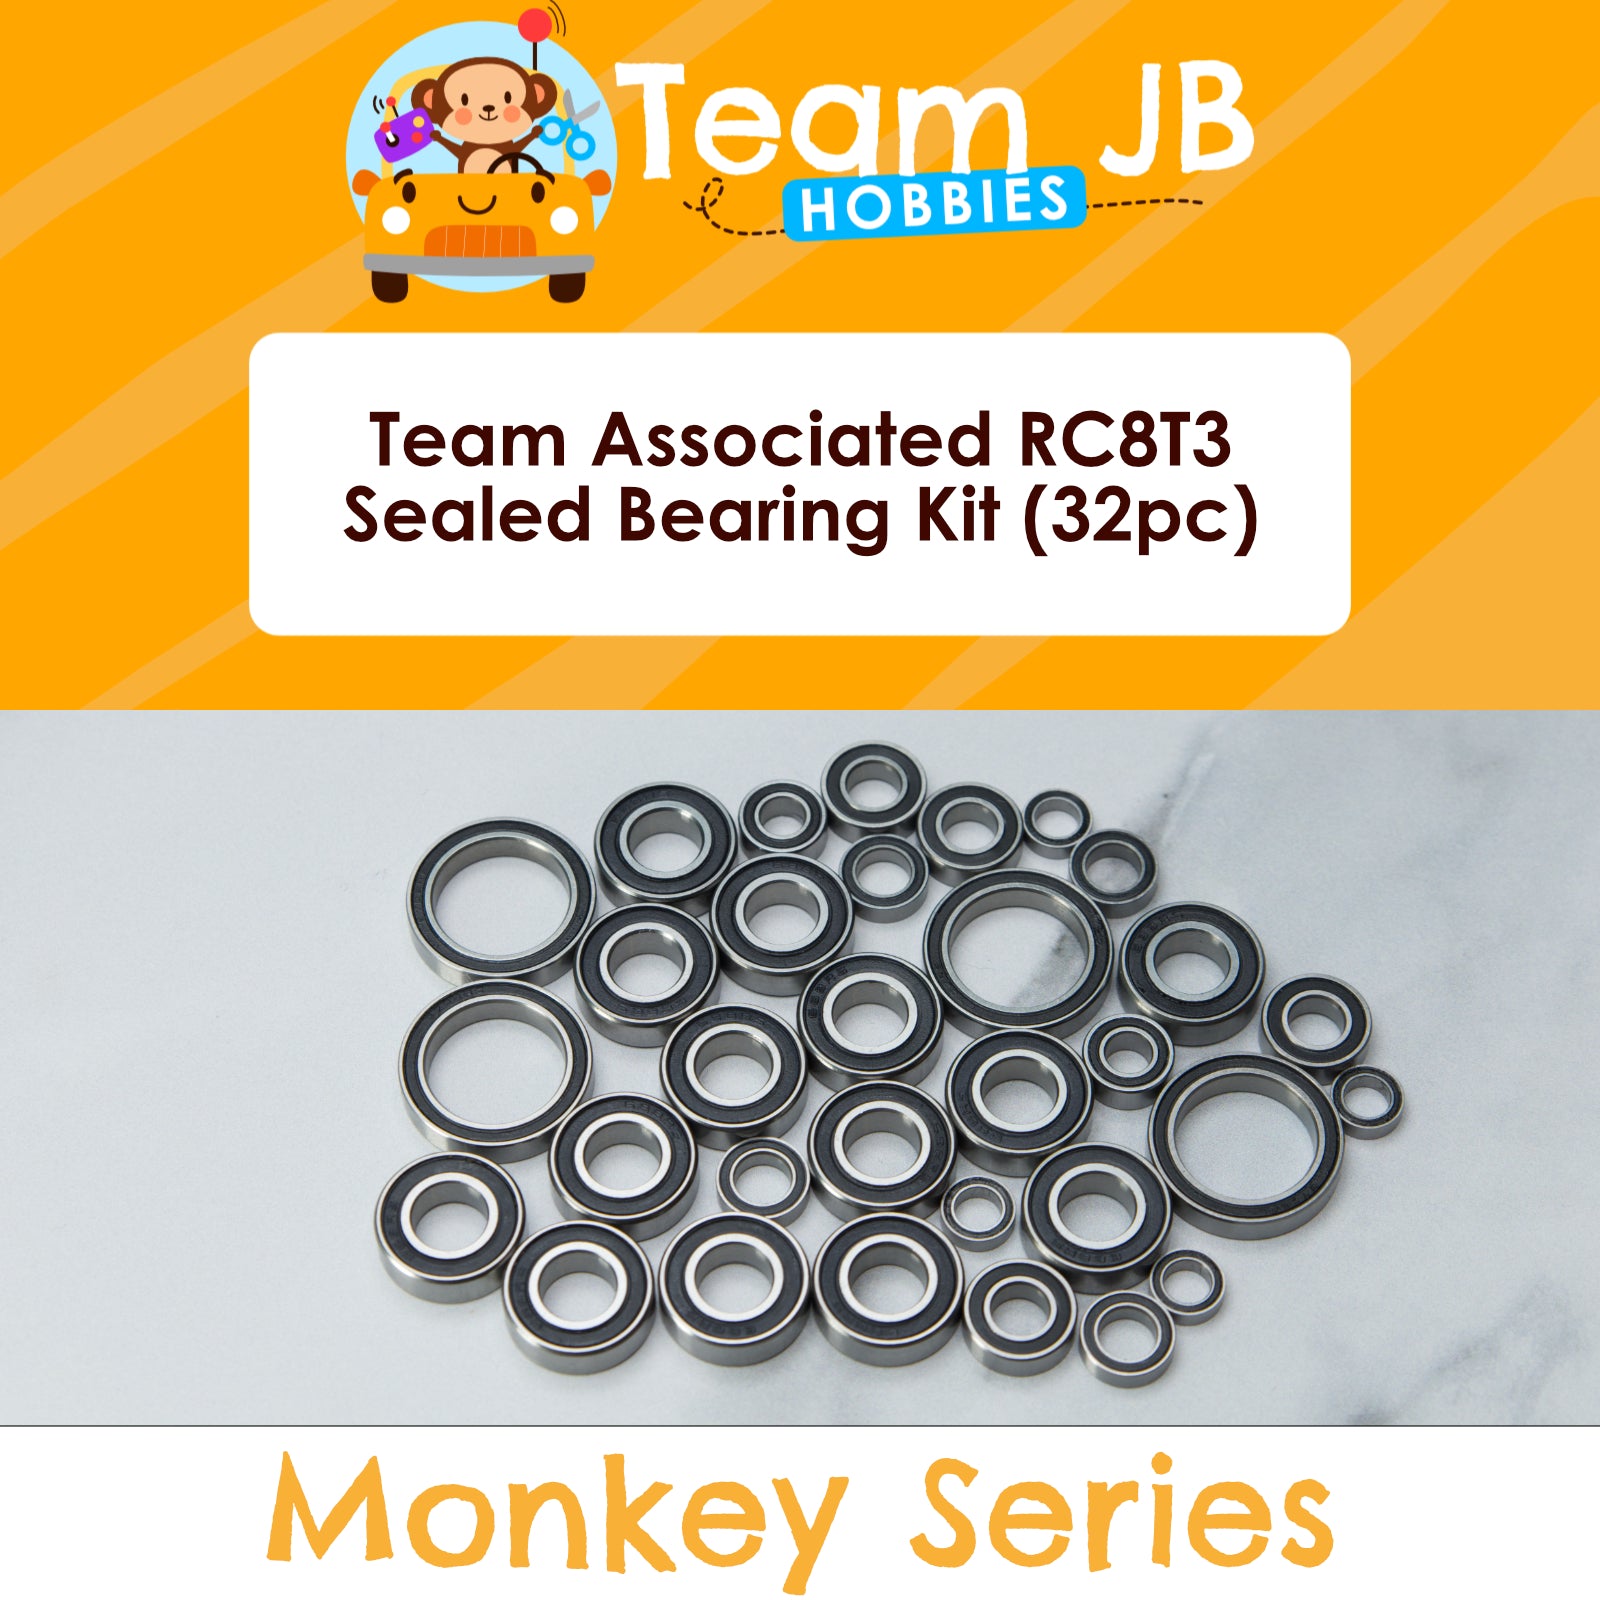 Team Associated RC8T3 - Sealed Bearing Kit